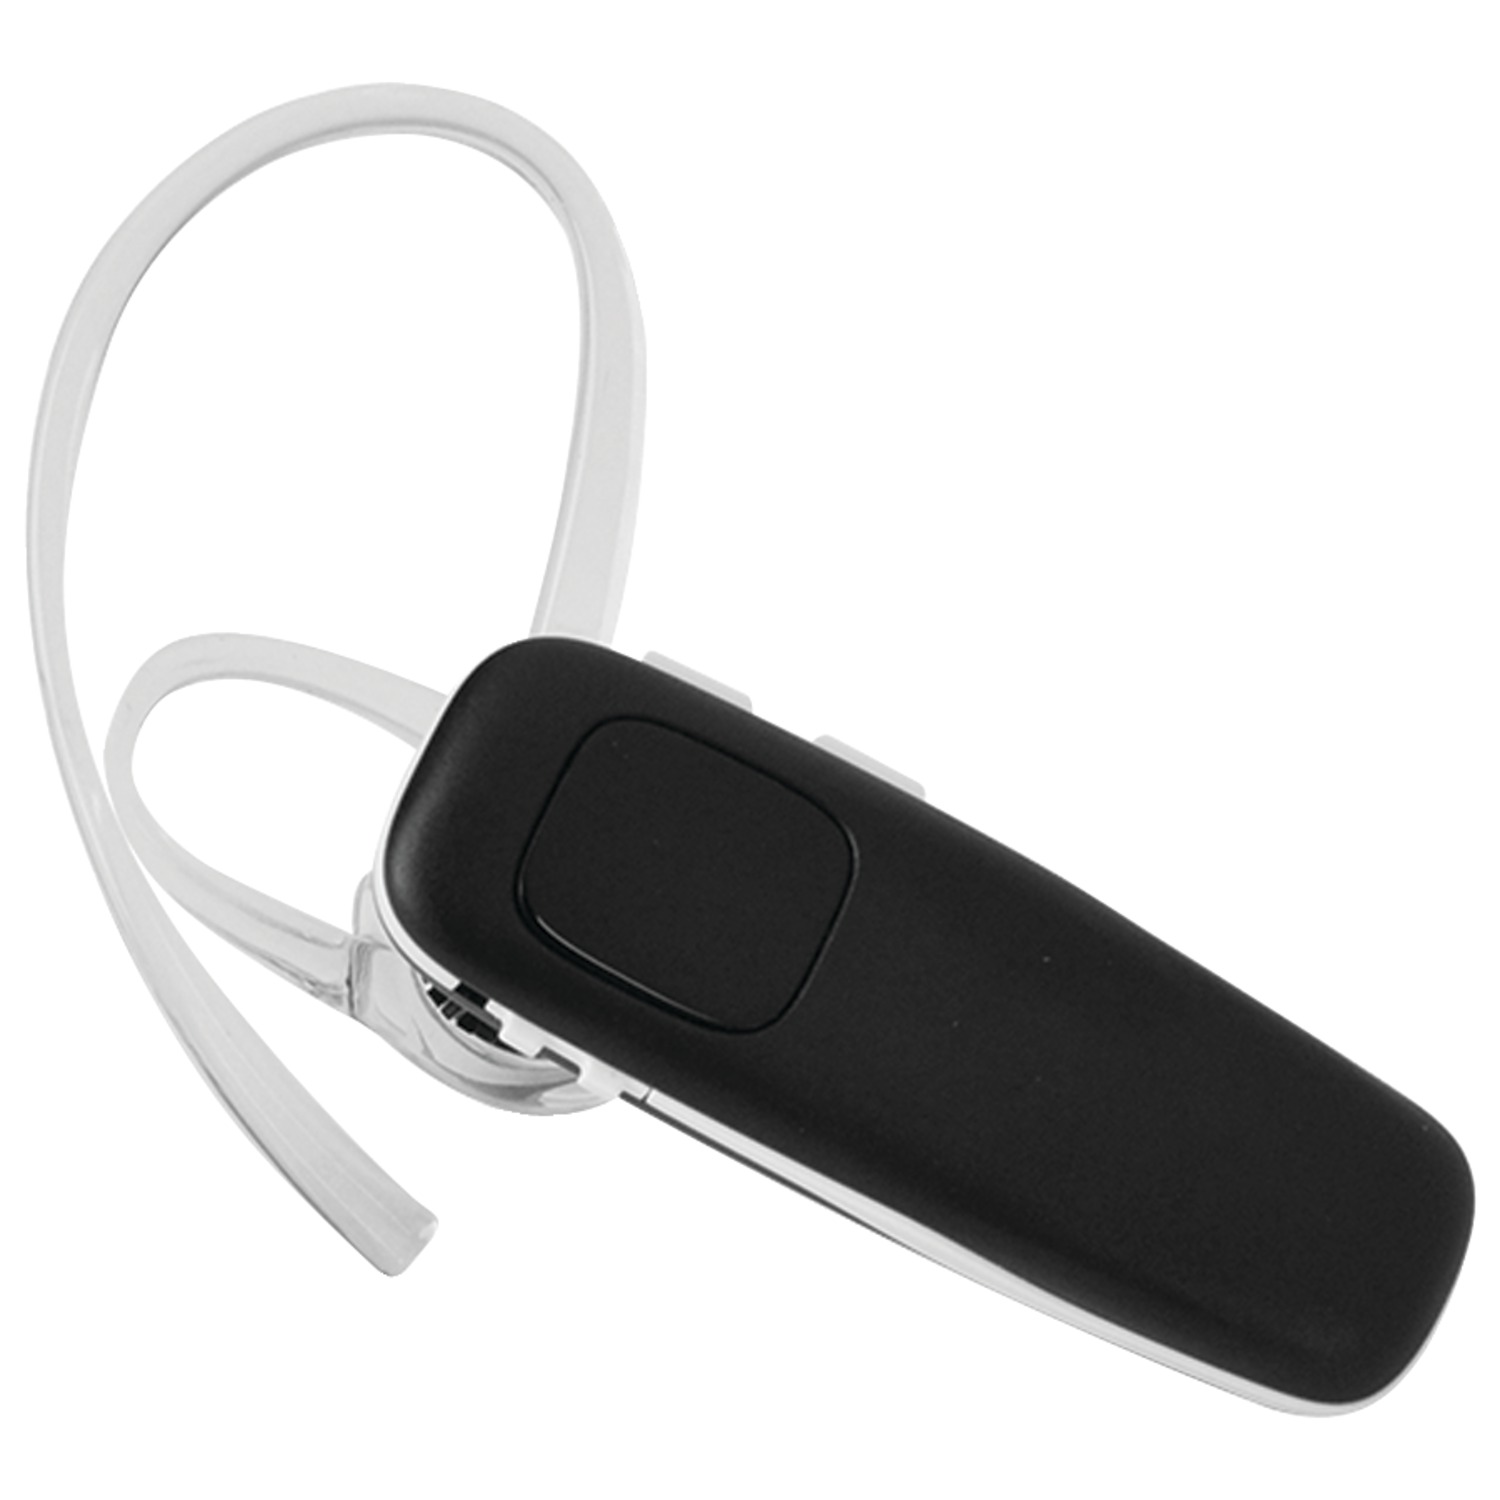 Plantronics M70 Mobile Bluetooth Headset - Walmart.com